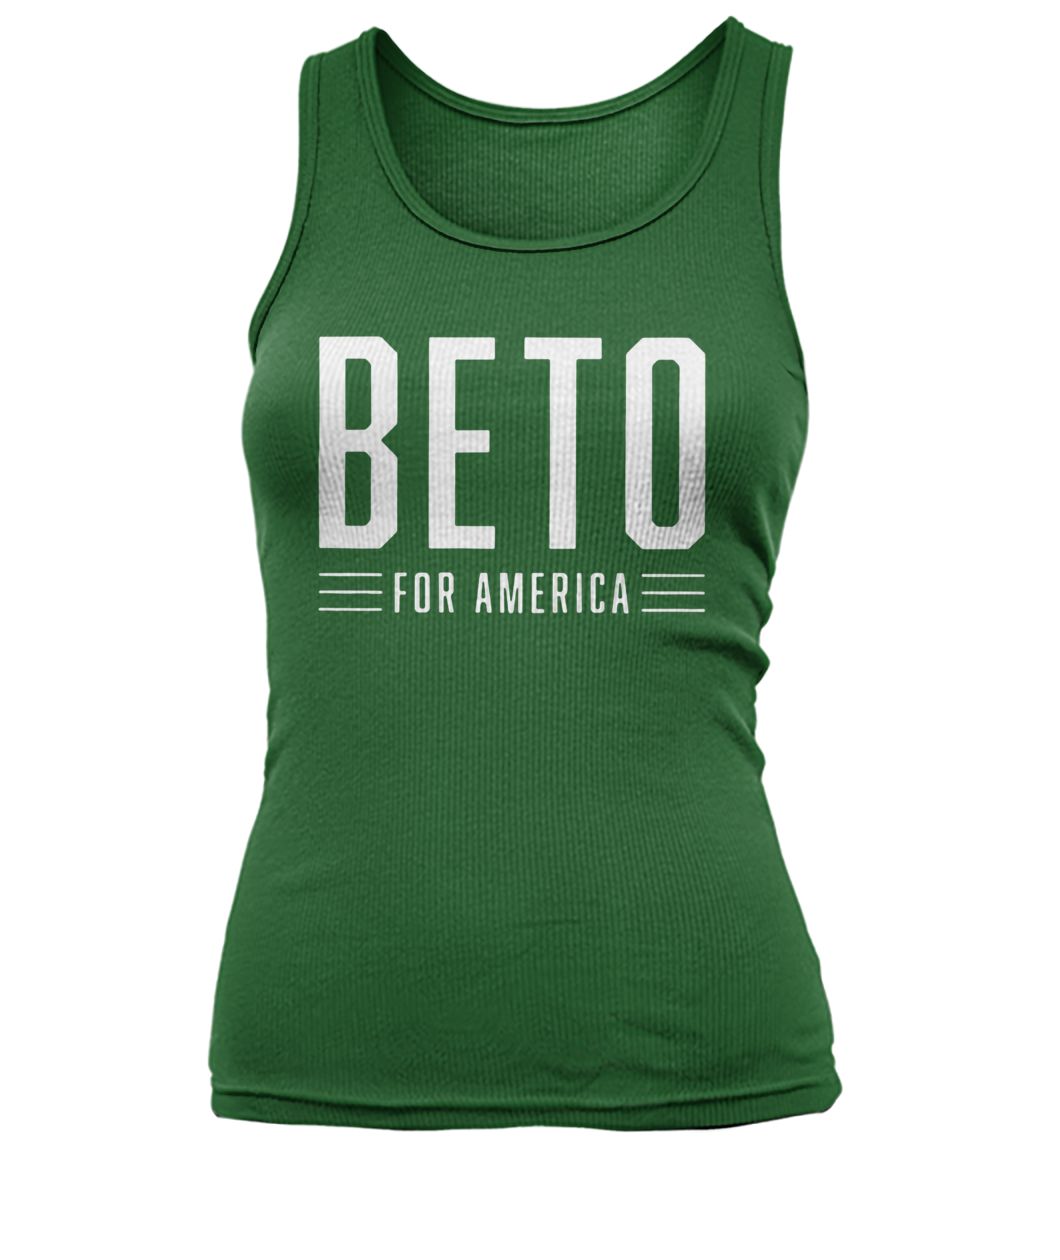 Beto for america logo campaign women's tank top